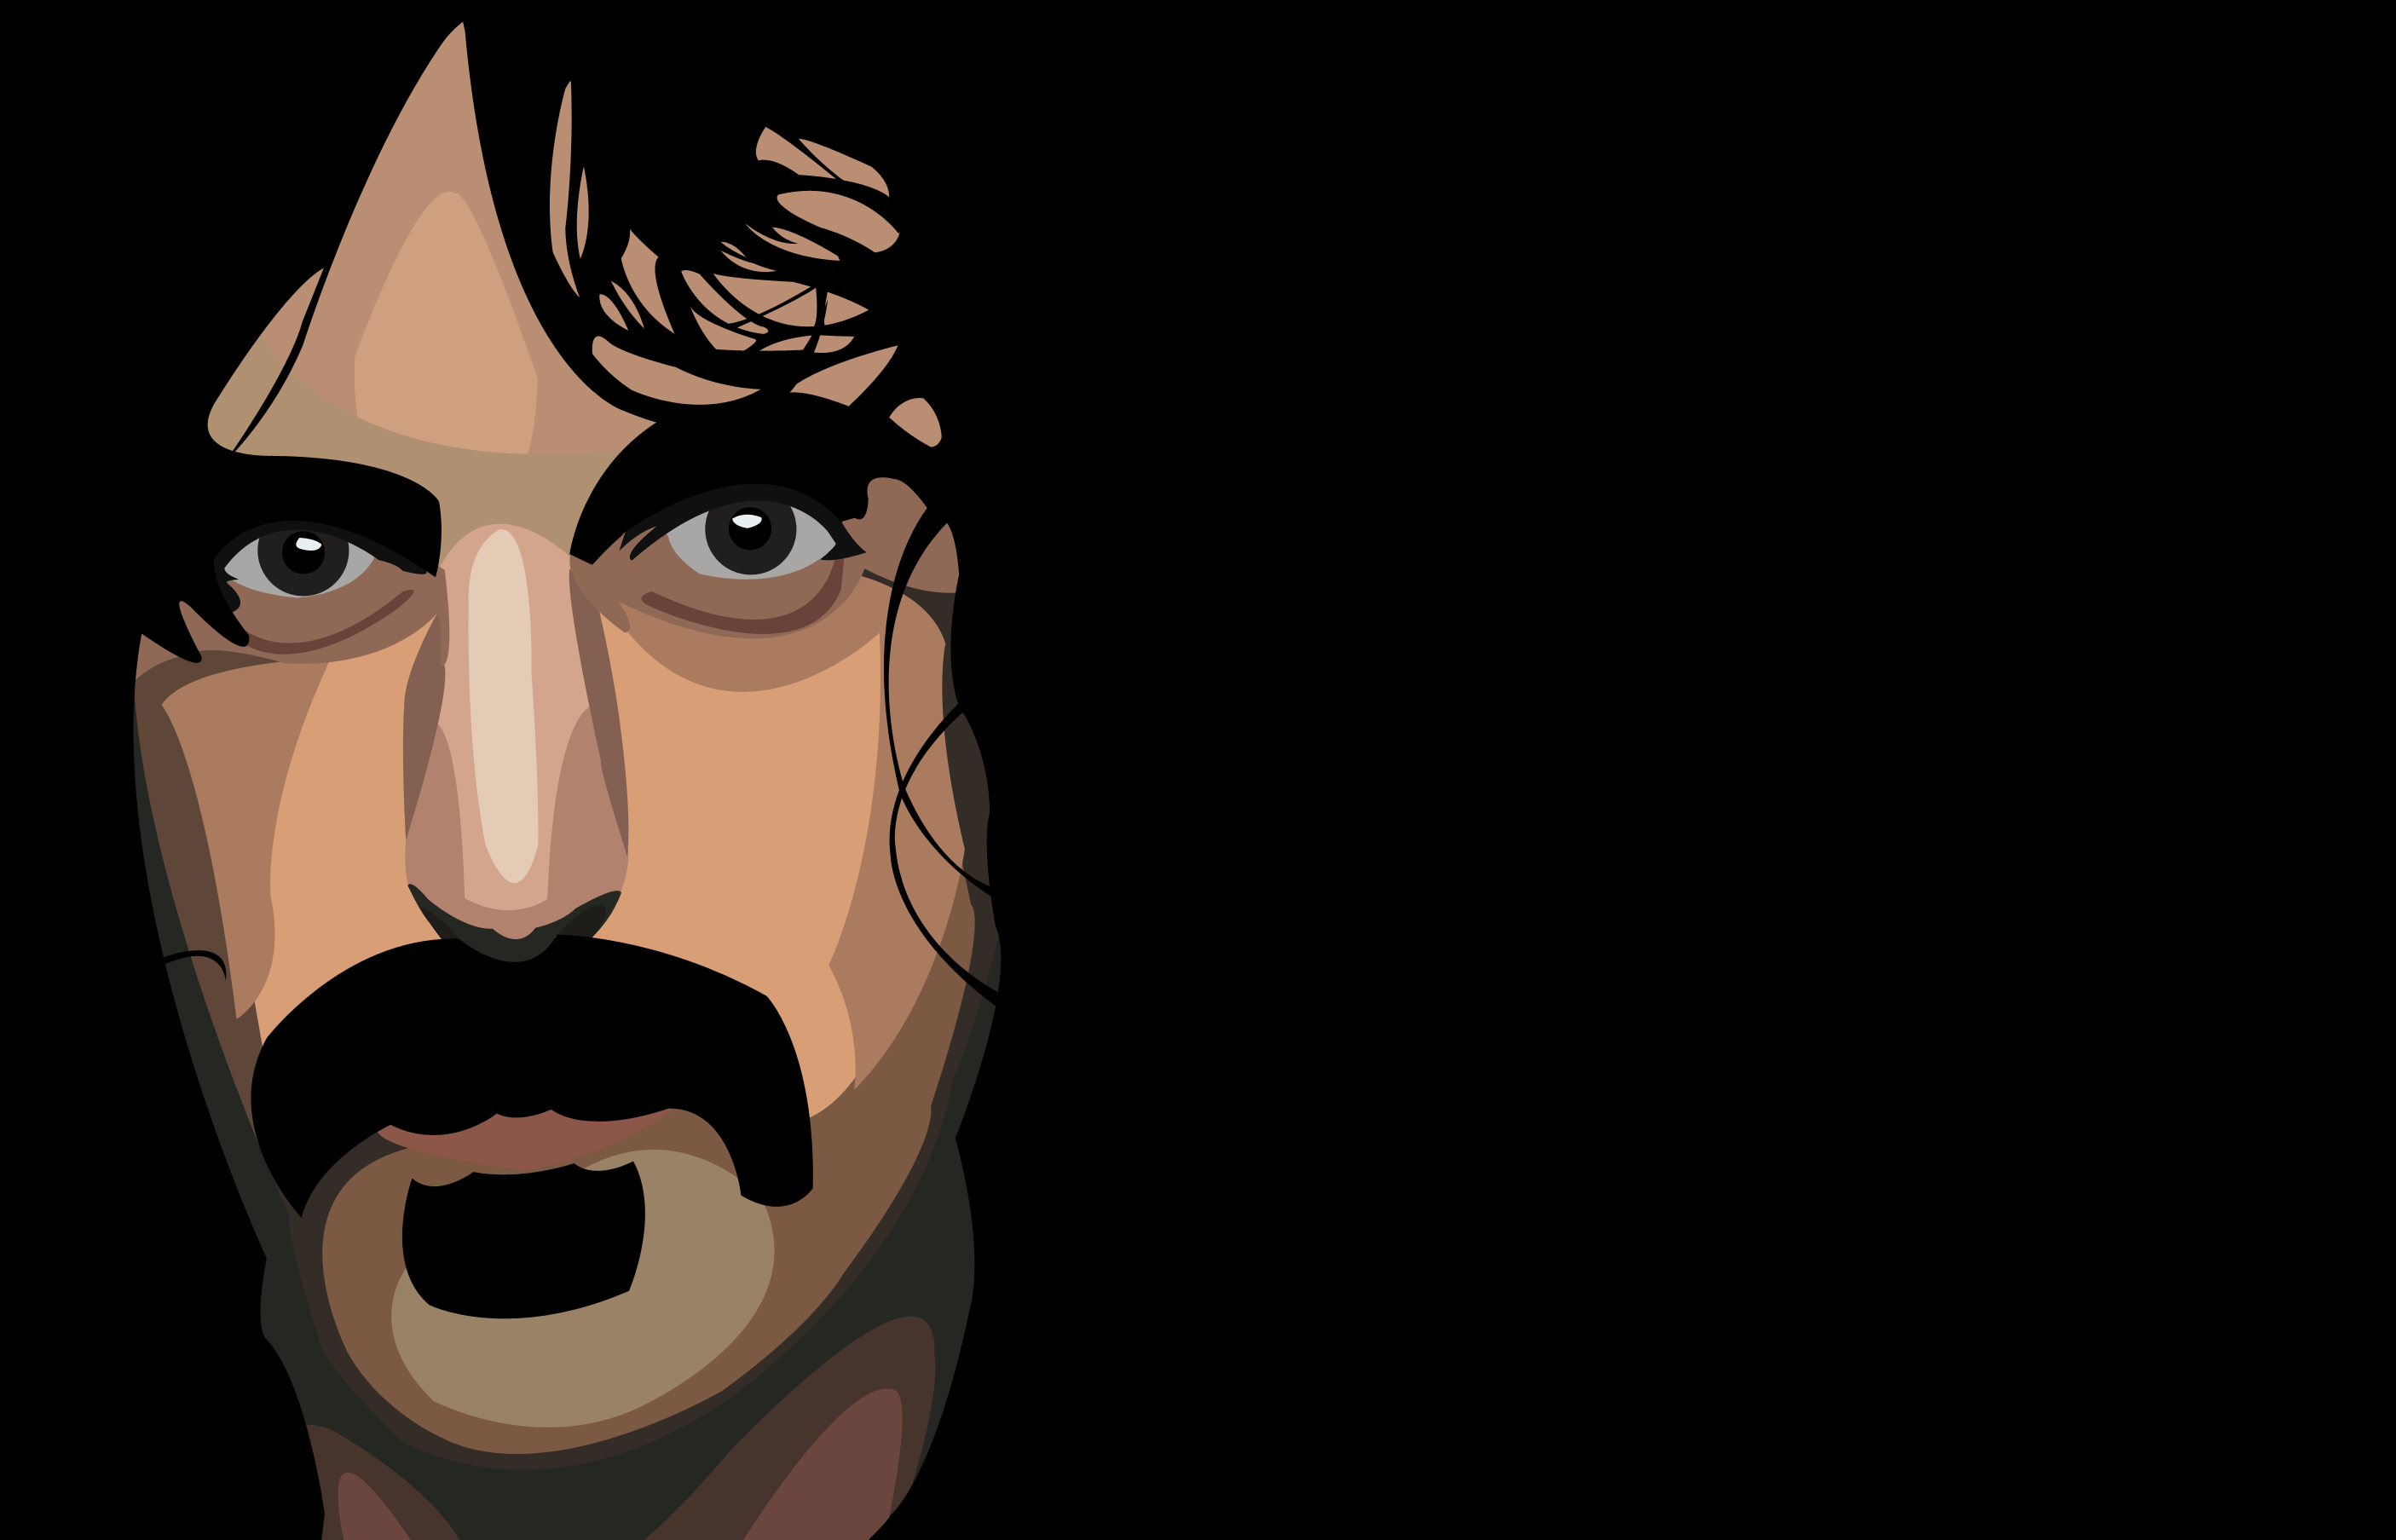 It&;s Frank Zappa Day! So I drew this wallpaper in Photohop